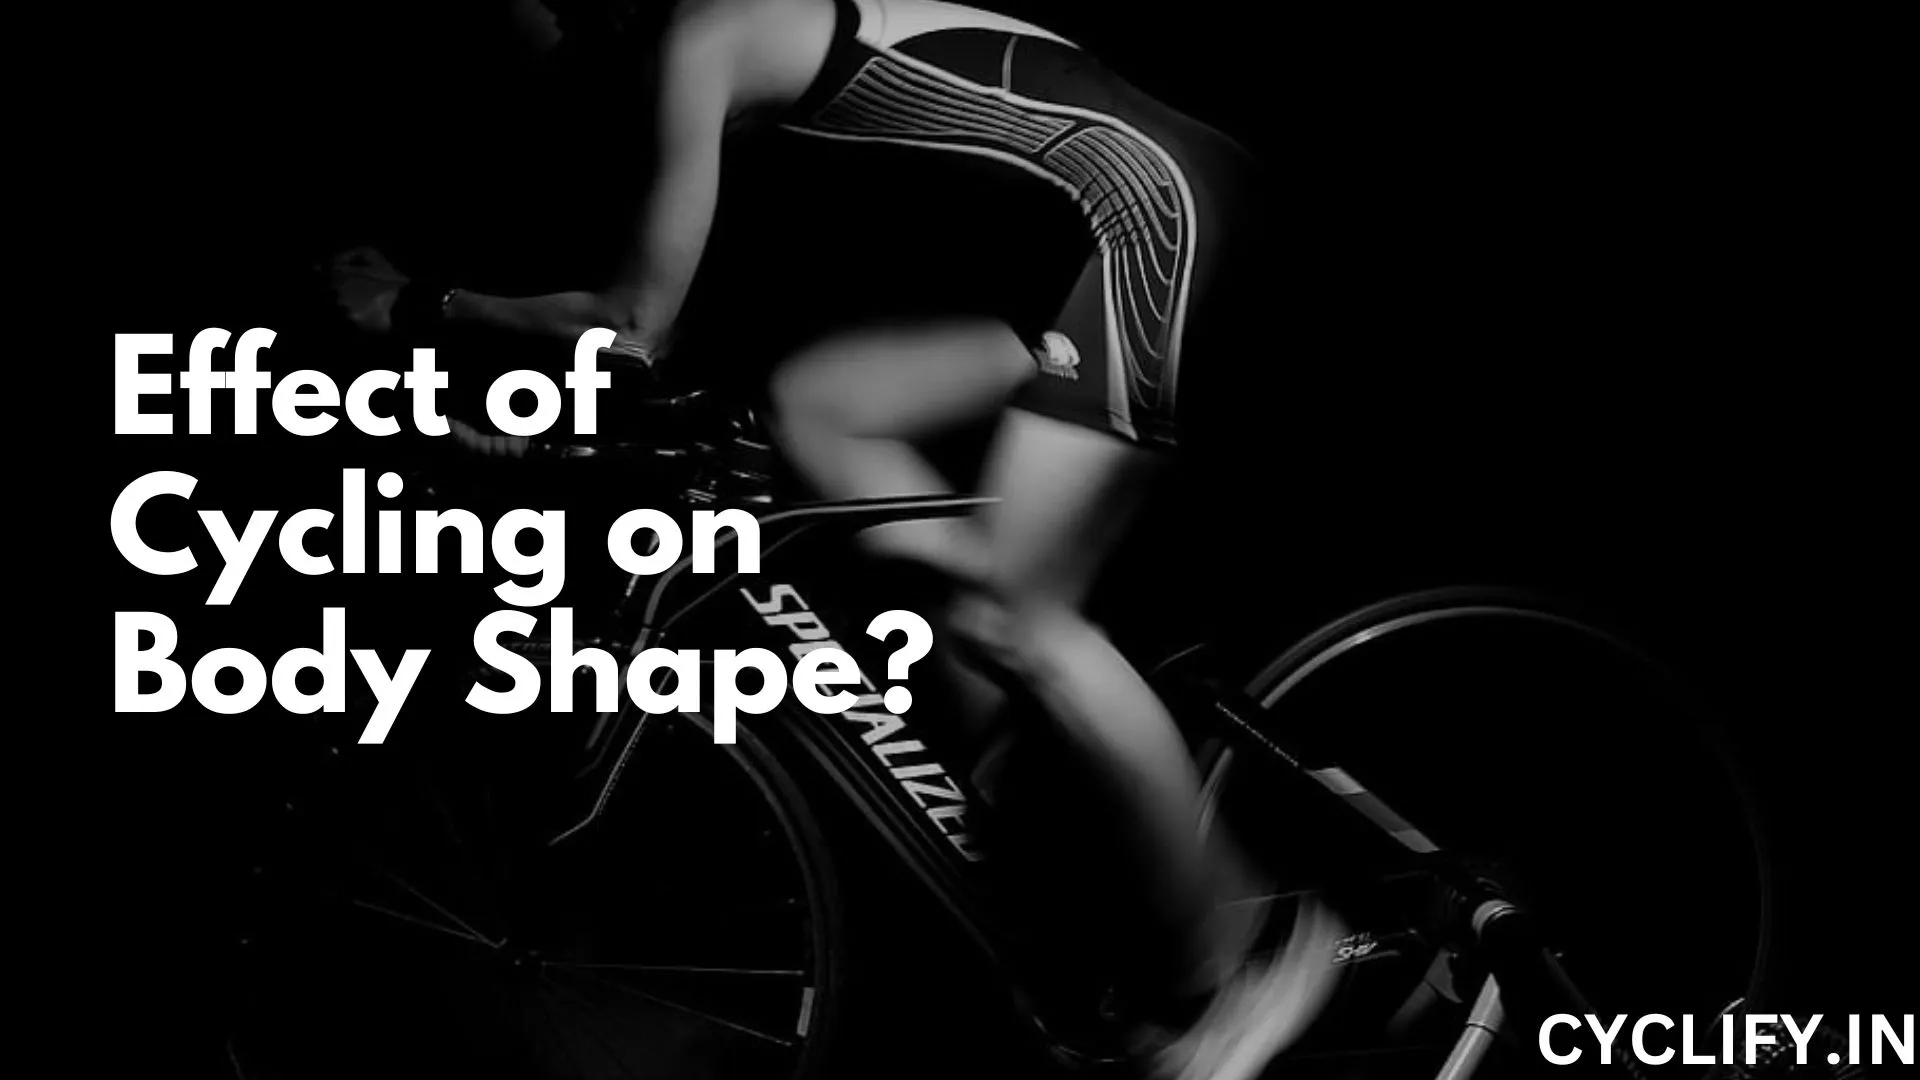 Effect of cycling on body shape - a cyclist on a bike.